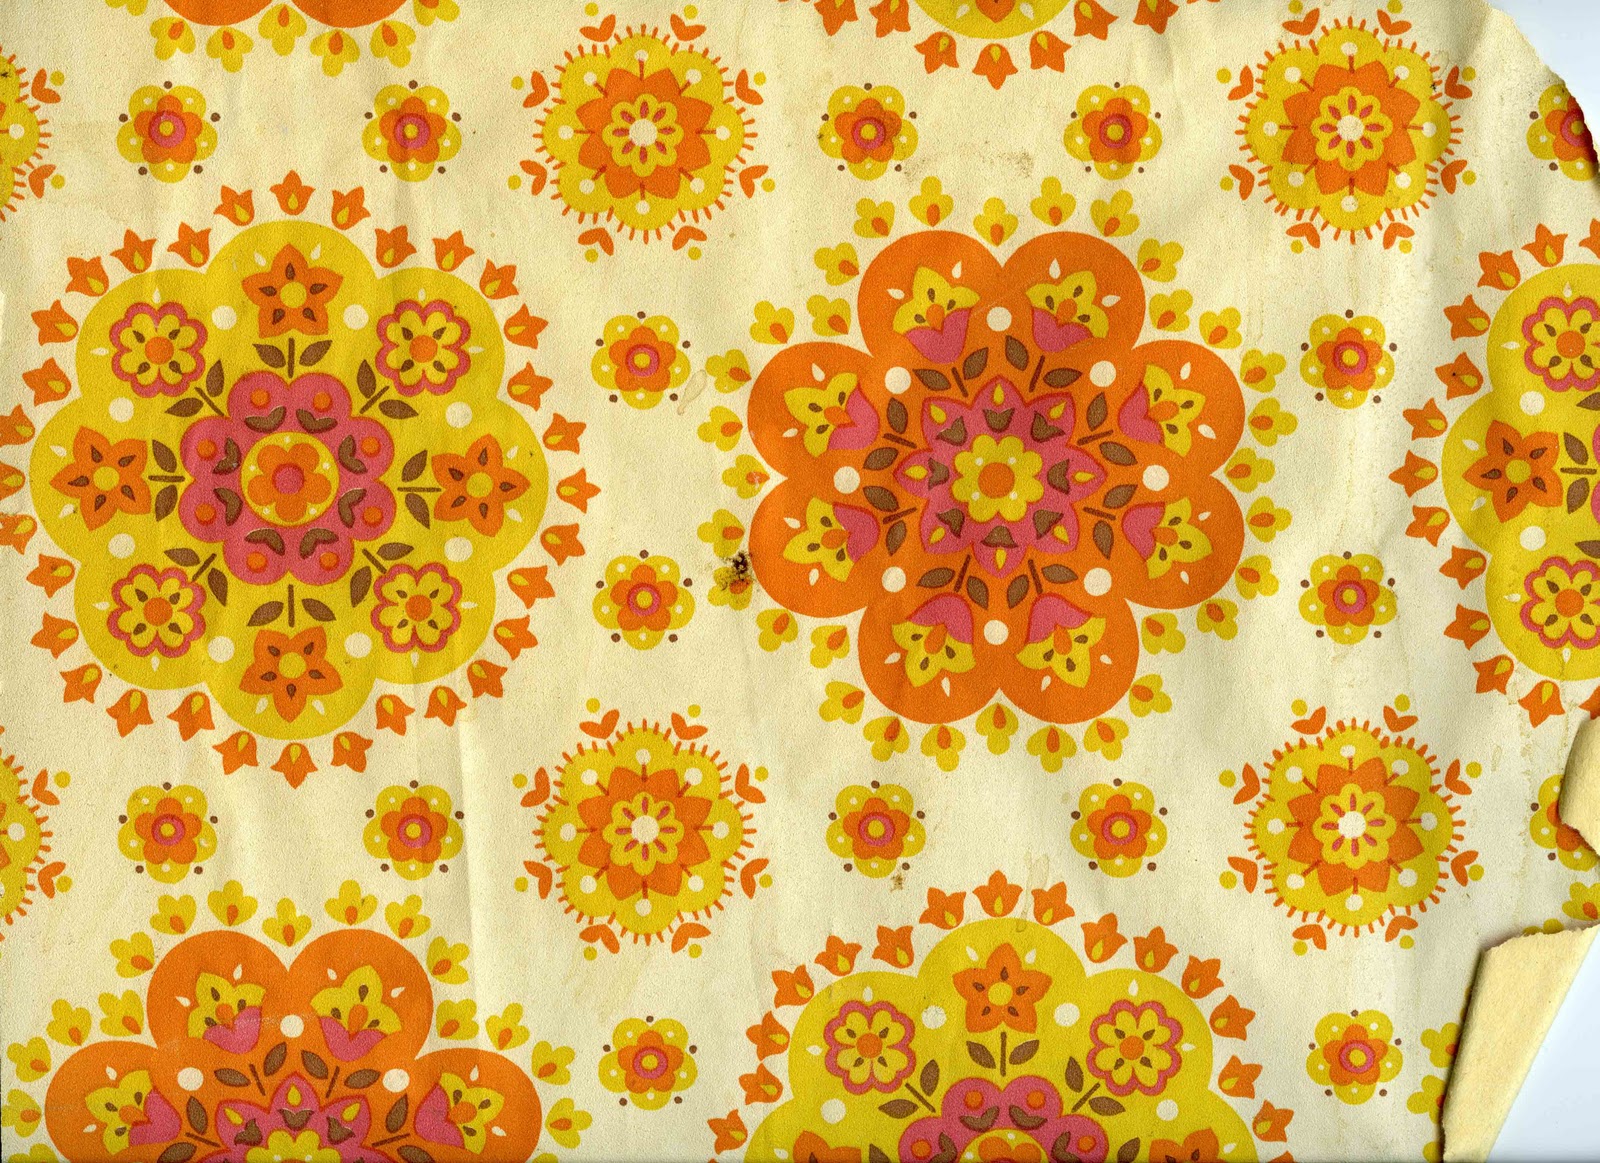 https://blogger.googleusercontent.com/img/b/R29vZ2xl/AVvXsEh-bnPmoNaFfKRb1NyqAwIW9dirxKddJYSKlJb0M8zczeWb5gc4UhE4ZTwaZkpWXei8W6GNf2FwrqO0PJNjGromUj4VRUQj4N840MYjOC9-6BONQuNCAl9a6XCHNN0BylOjWTg4tC07zEE/s1600/wallpaper-60s-70s-yellow-orange-floral-circular-pattern-design-on-wall-of-house-built-in-about-1970-fading-and-tattered-rotated-5-DHD.jpg